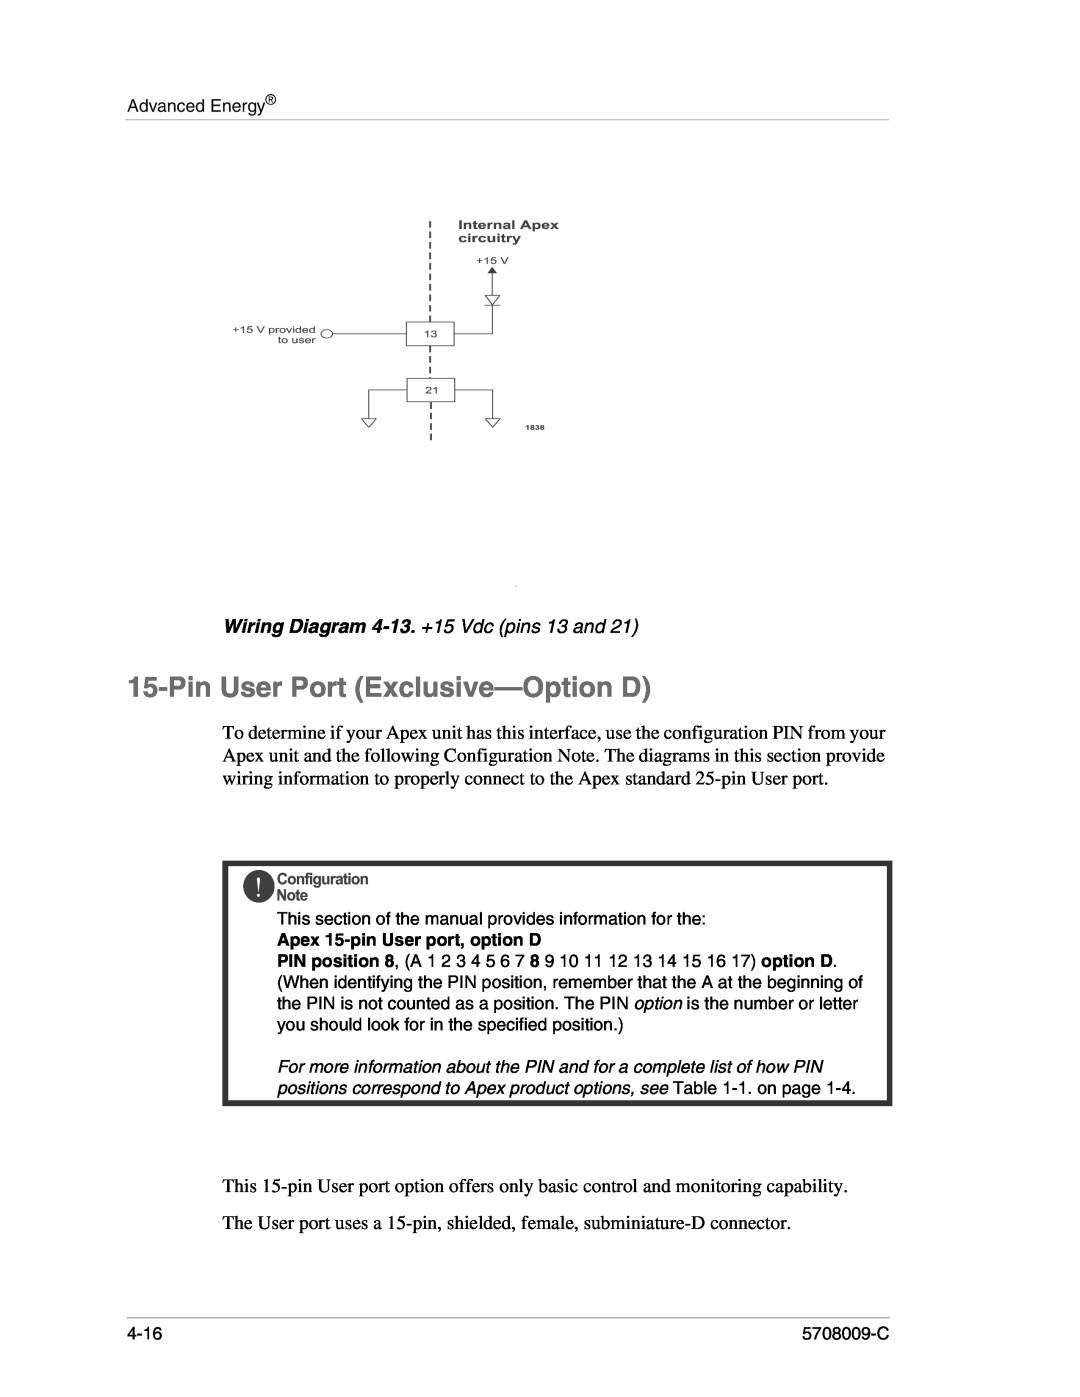 Apex Digital 5708009-C manual Pin User Port Exclusive-Option D, Wiring Diagram 4-13. +15 Vdc pins 13 and 